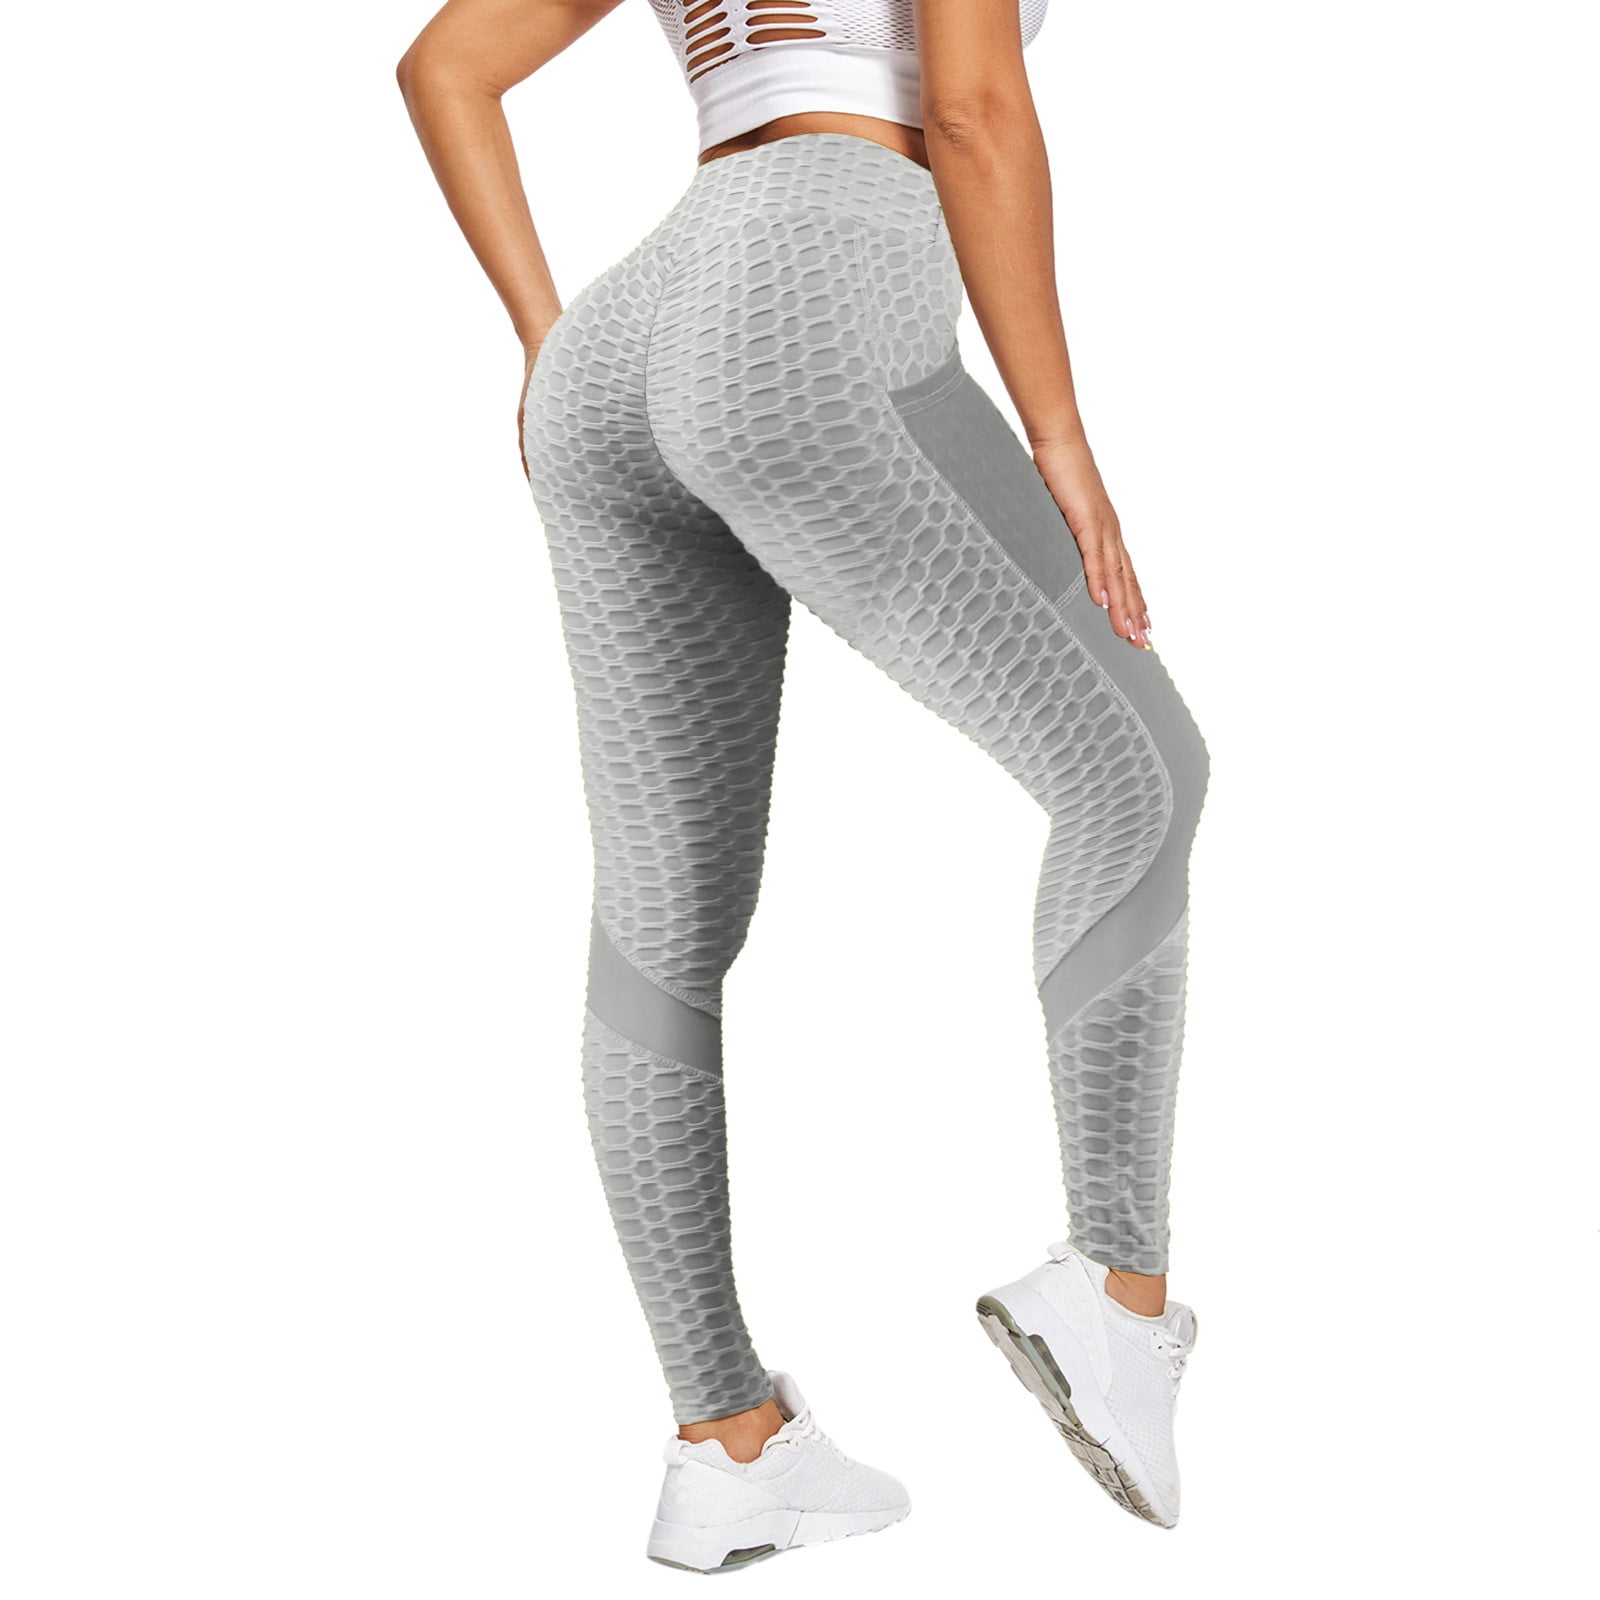 MOYOOGA High Waisted Workout Leggings for Women Tummy Control 7/8 Length  Yoga Pants (White, XS)